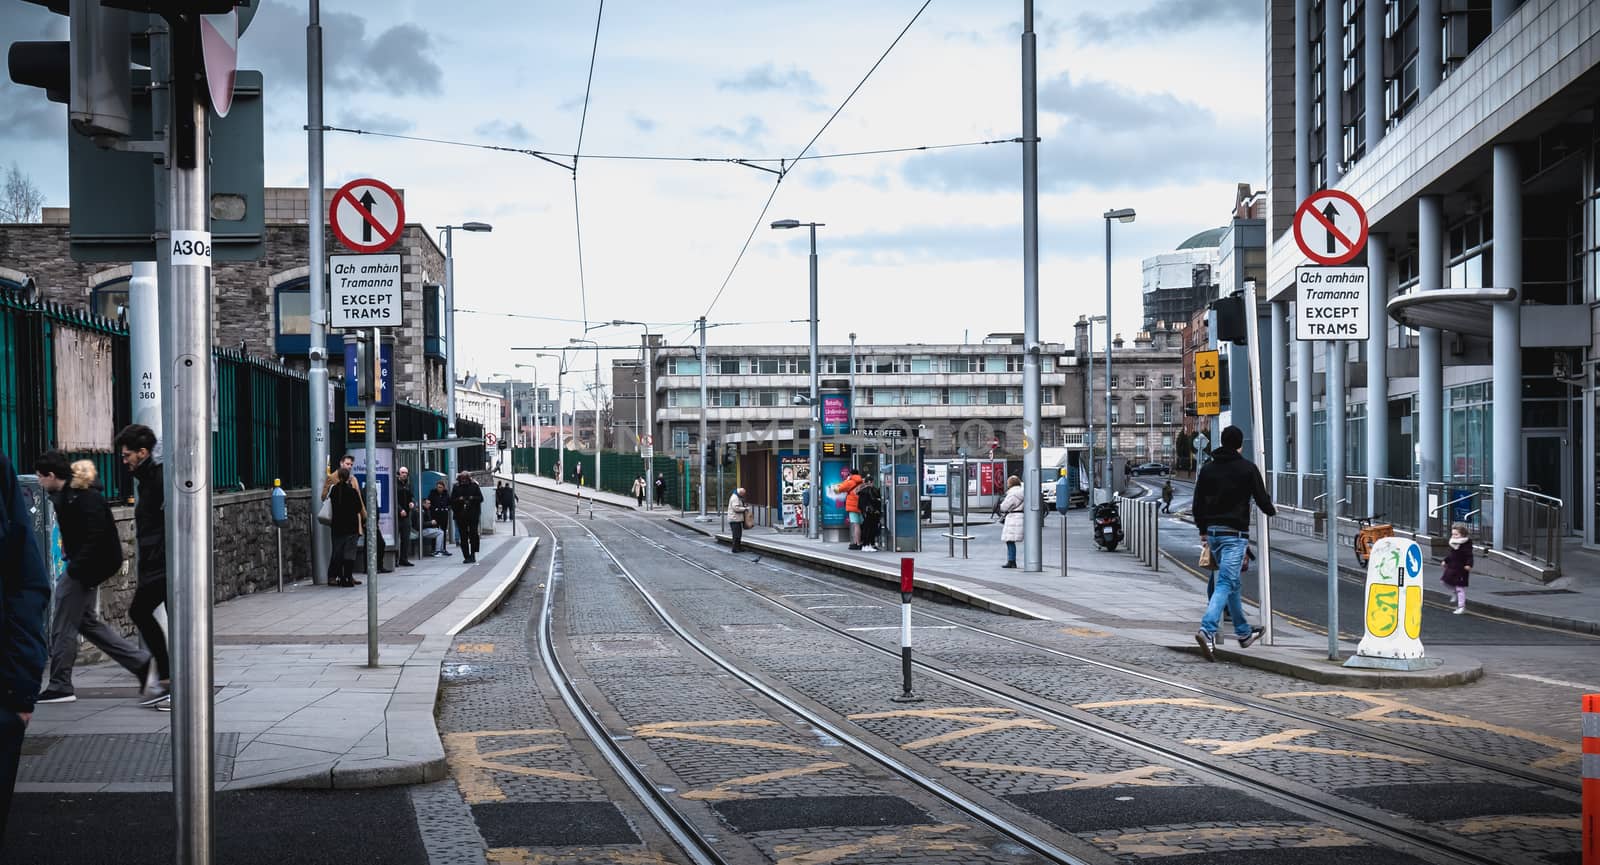 Passengers waiting for an electric tram in Dublin, Ireland by AtlanticEUROSTOXX